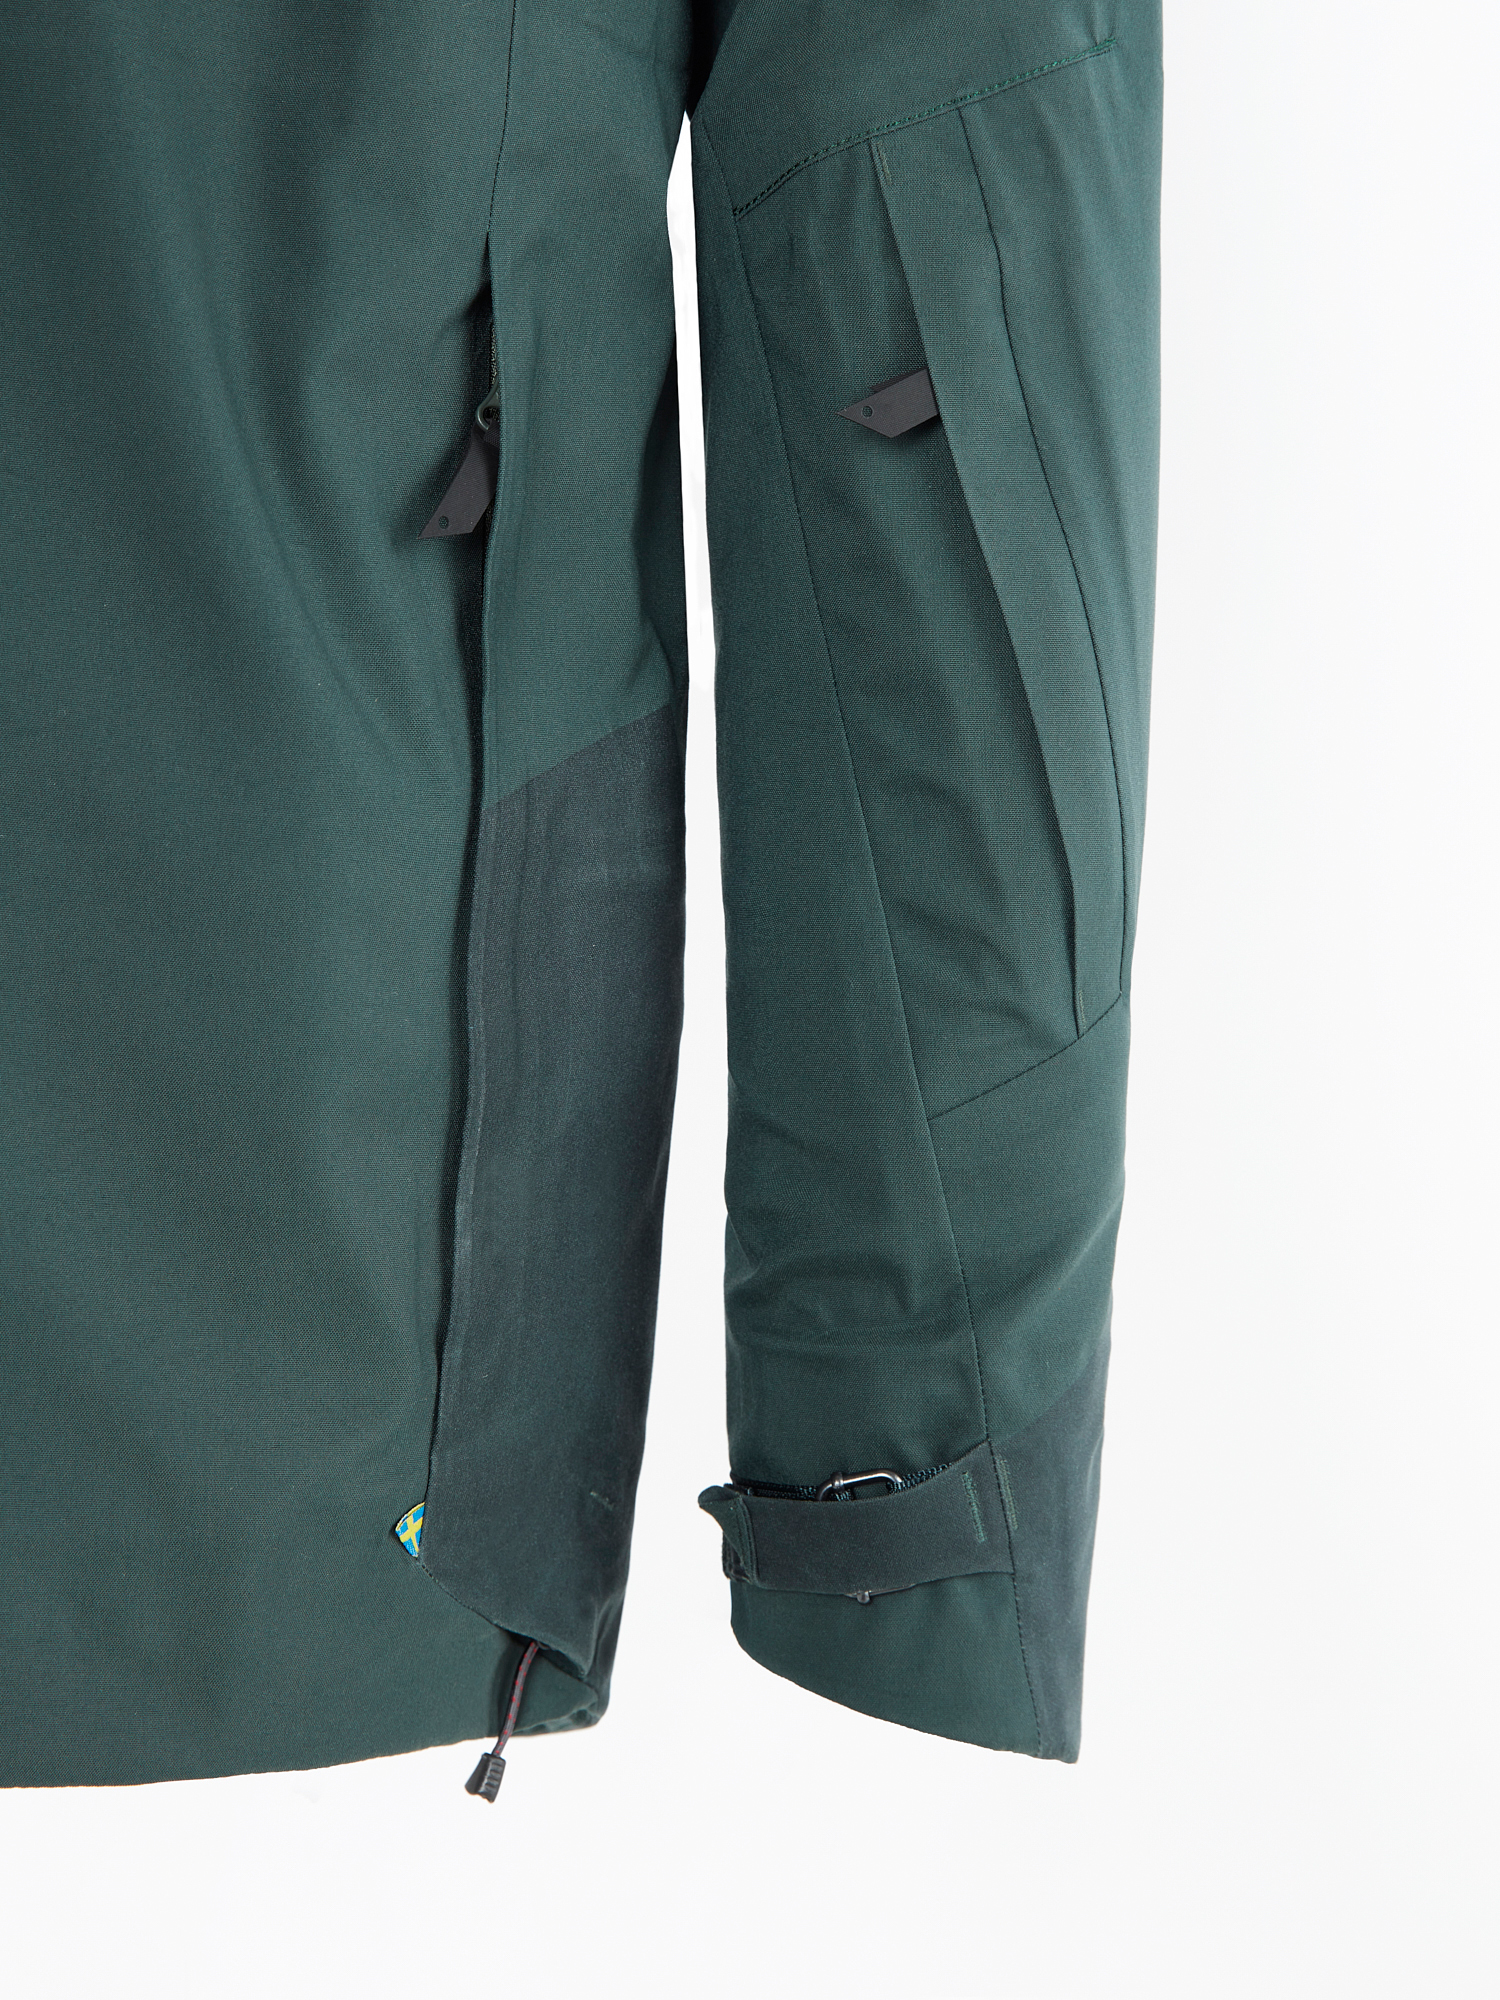 10604M81 - Brage Jacket M's - Spruce Green